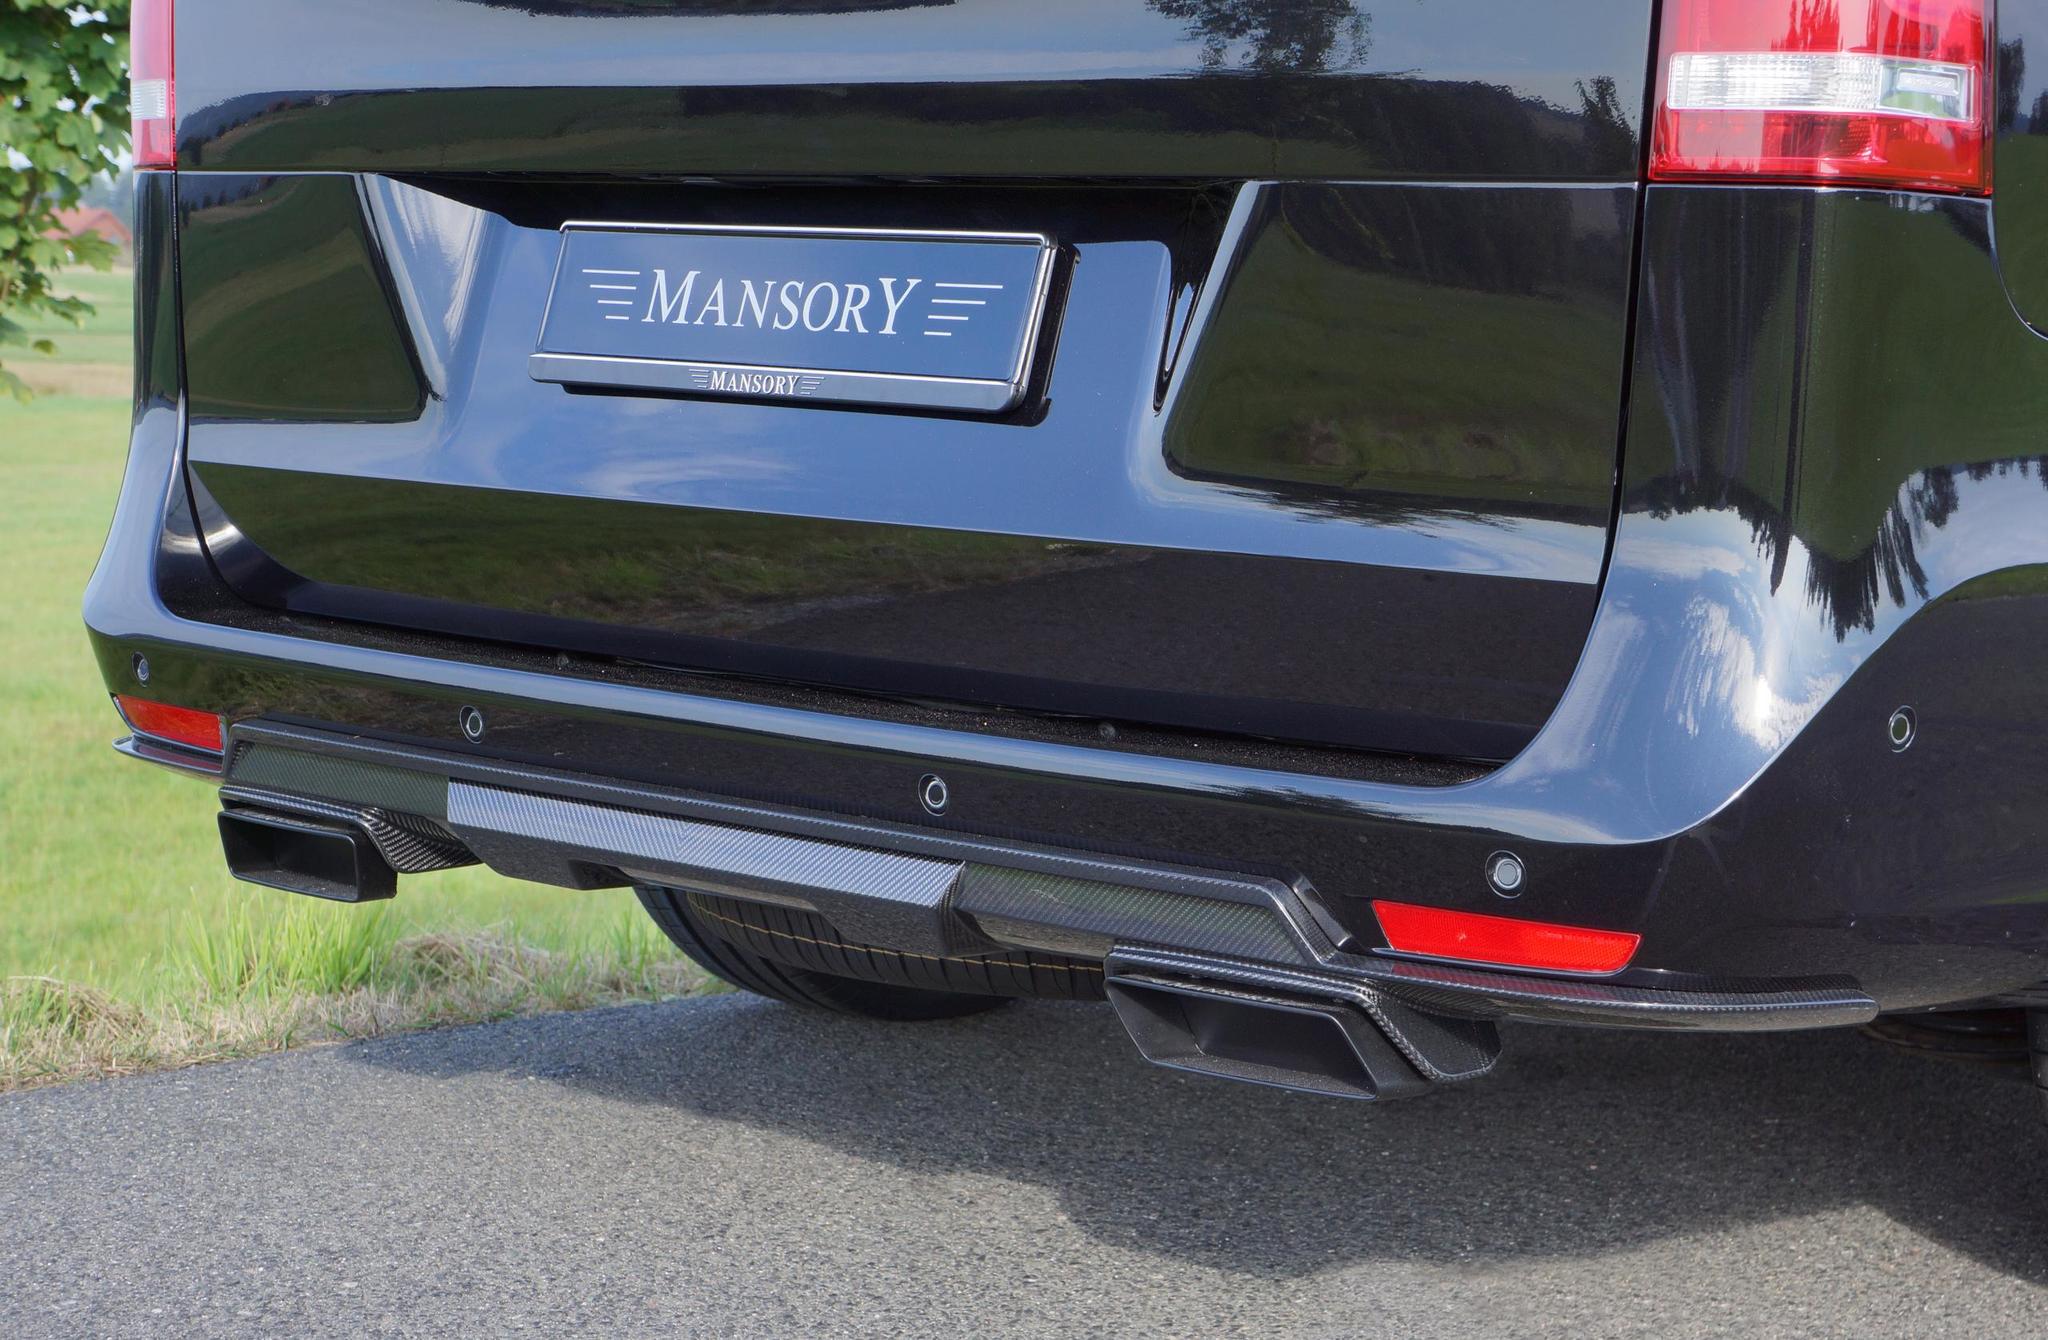 Mansory body kit for Mercedes-Benz V-Class latest model